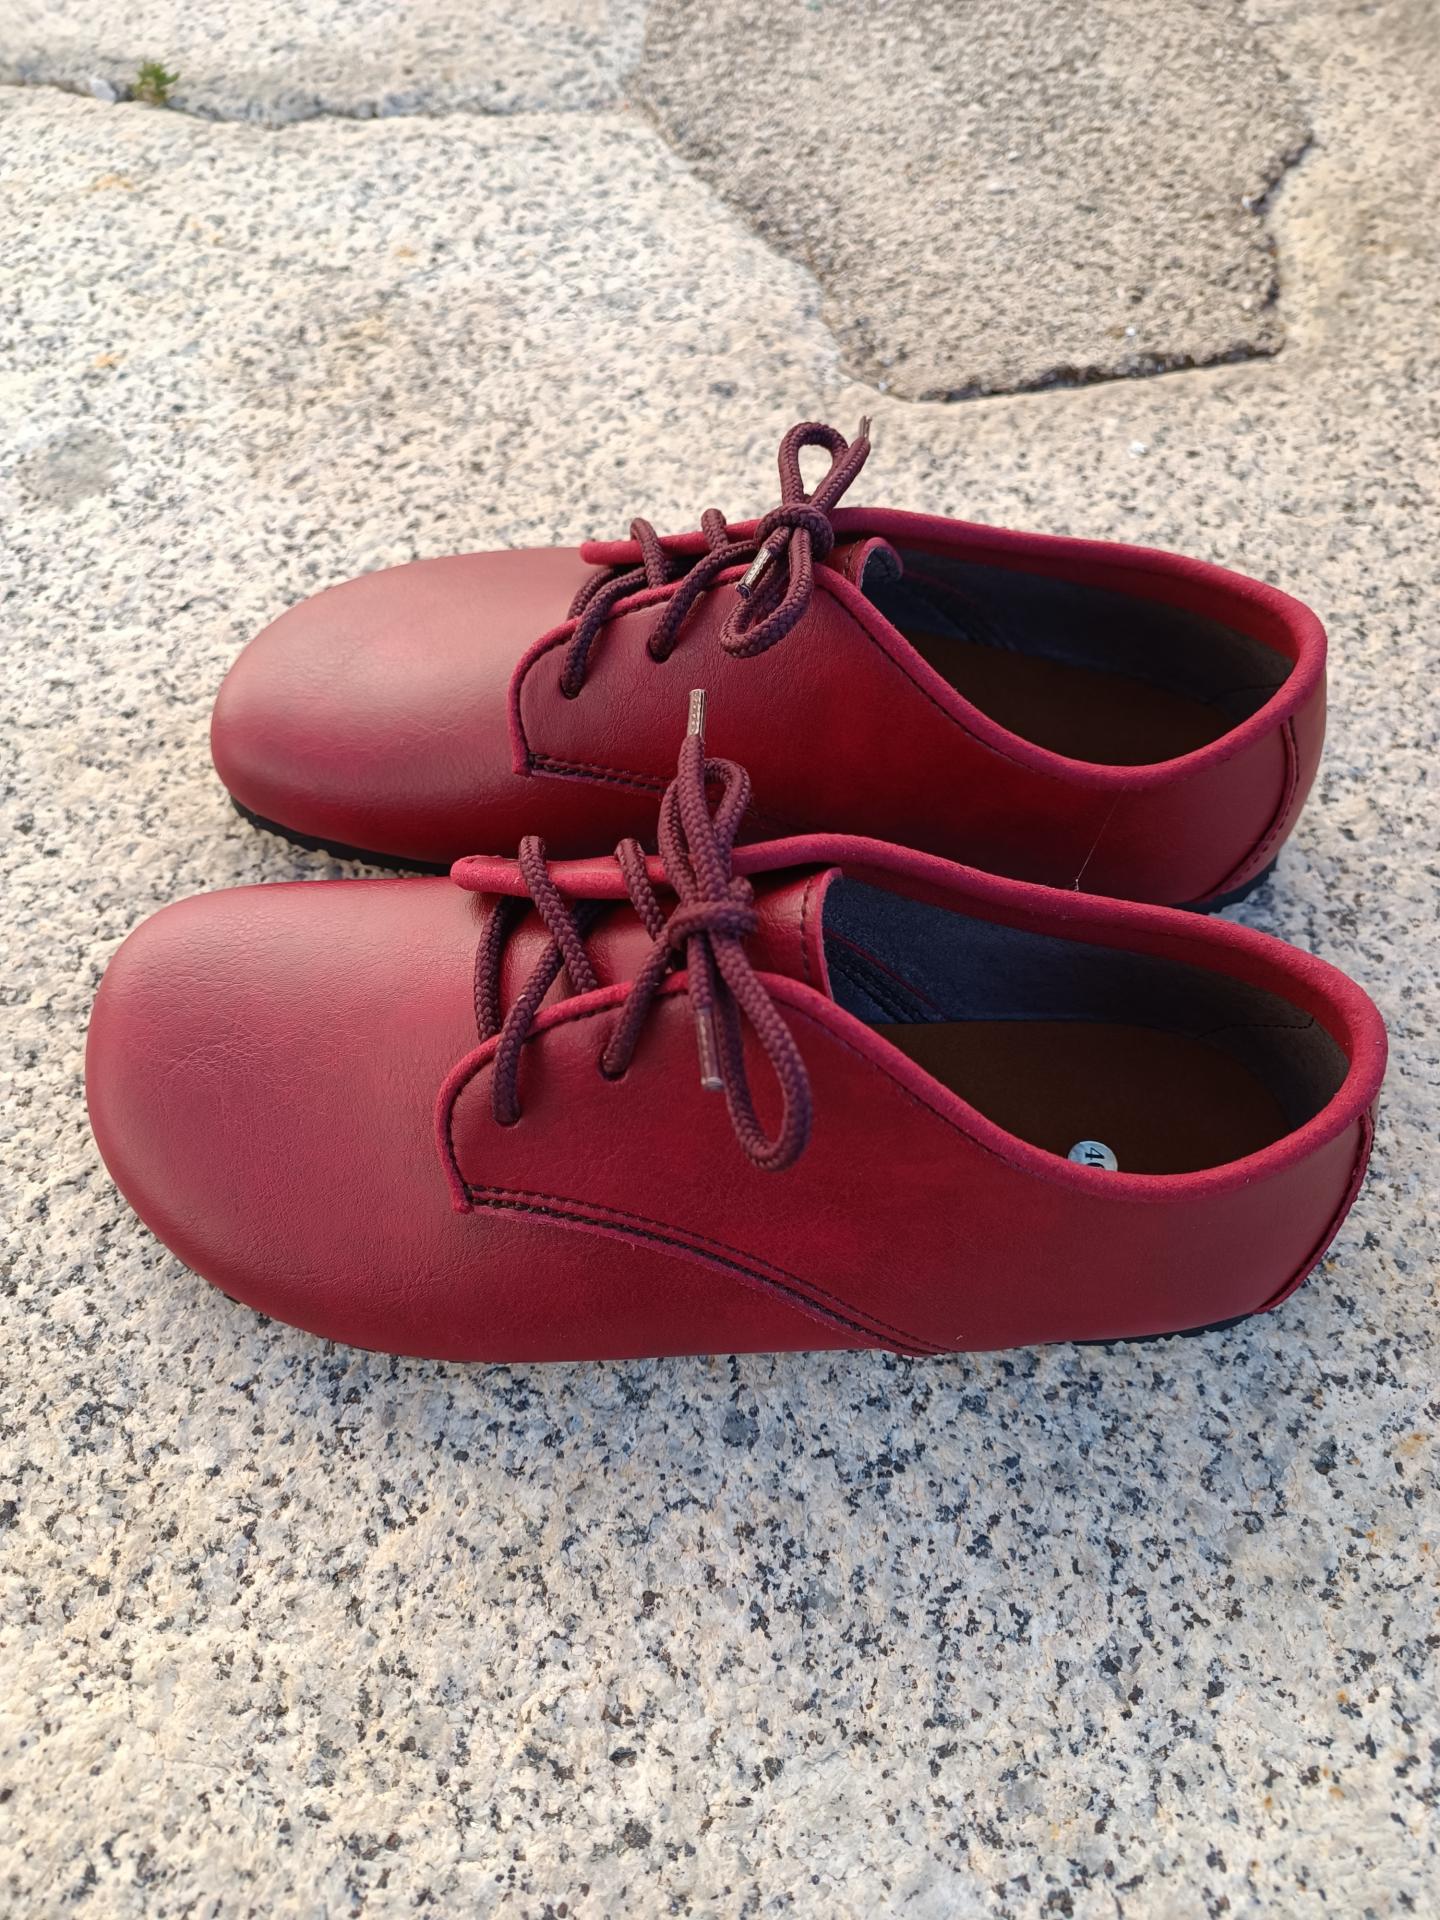 BAREFOOT AUSTIN color rojo, suelas Vibram SUPERNEWFLEX​ de 6mm de grosor, zapatos Barefoot para mujer y hombre, calzado Barefoot, zapato veganos, eco-friendly, barefoot.